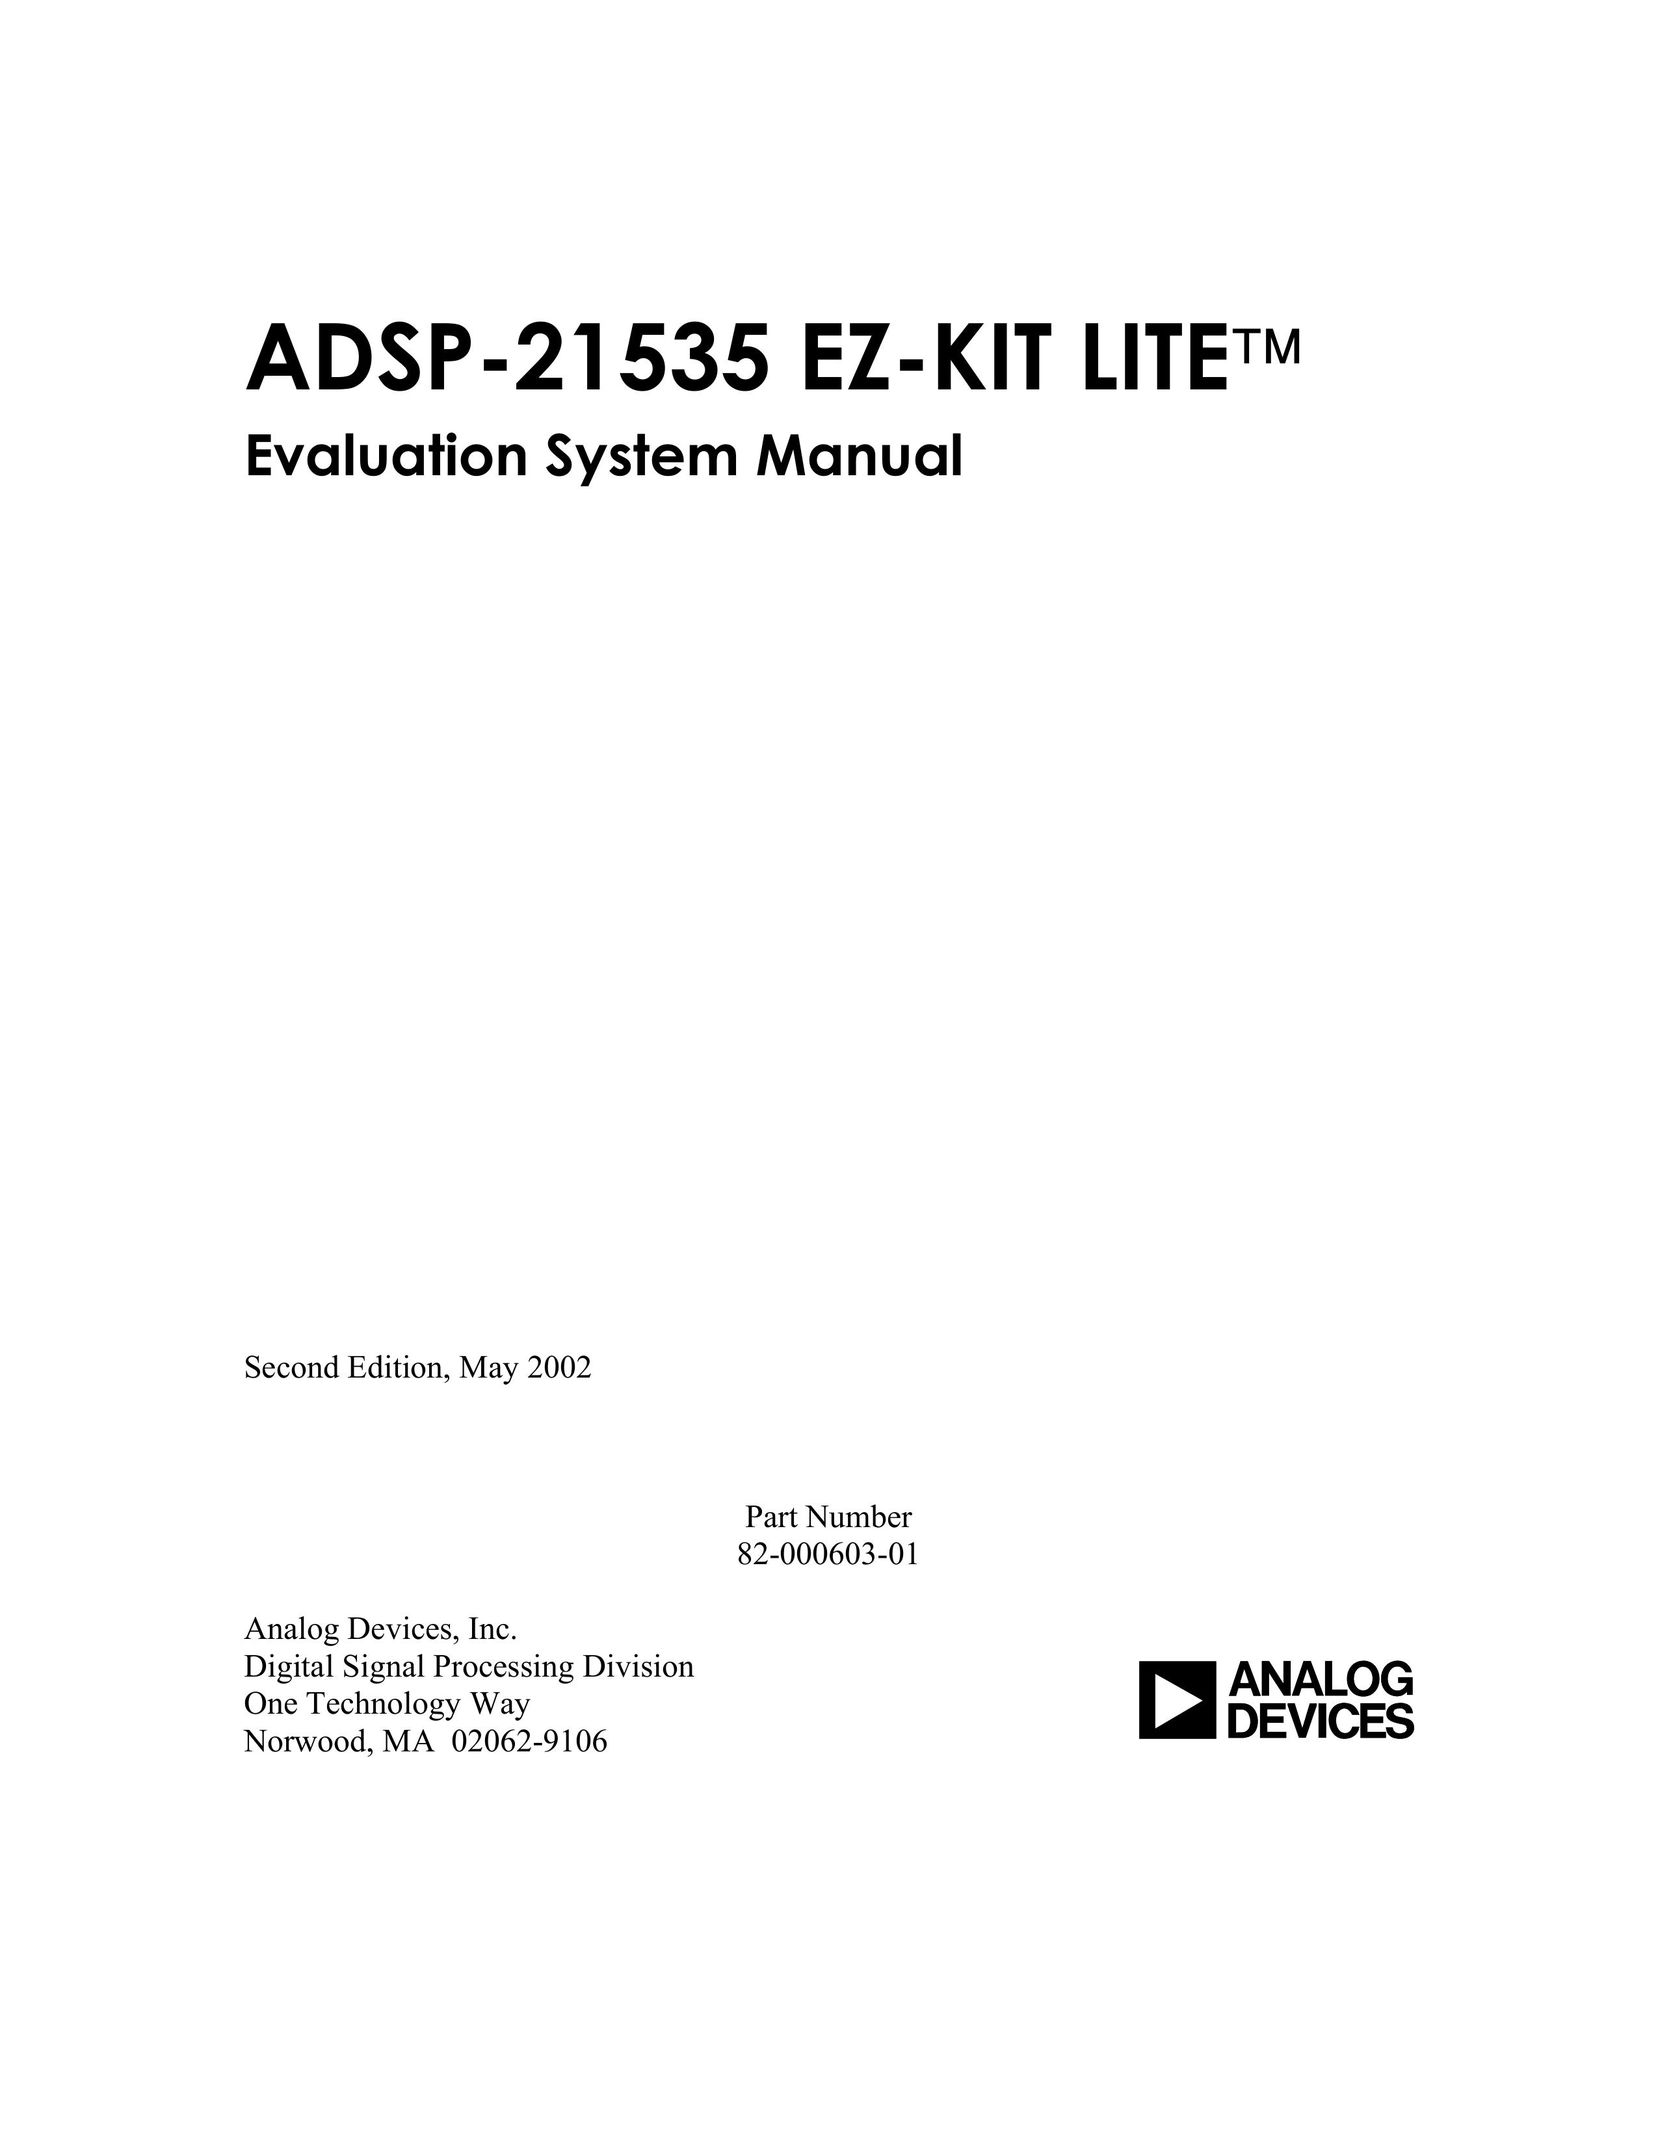 Analog Devices ADSP-21535 E-KIT LITE Computer Hardware User Manual